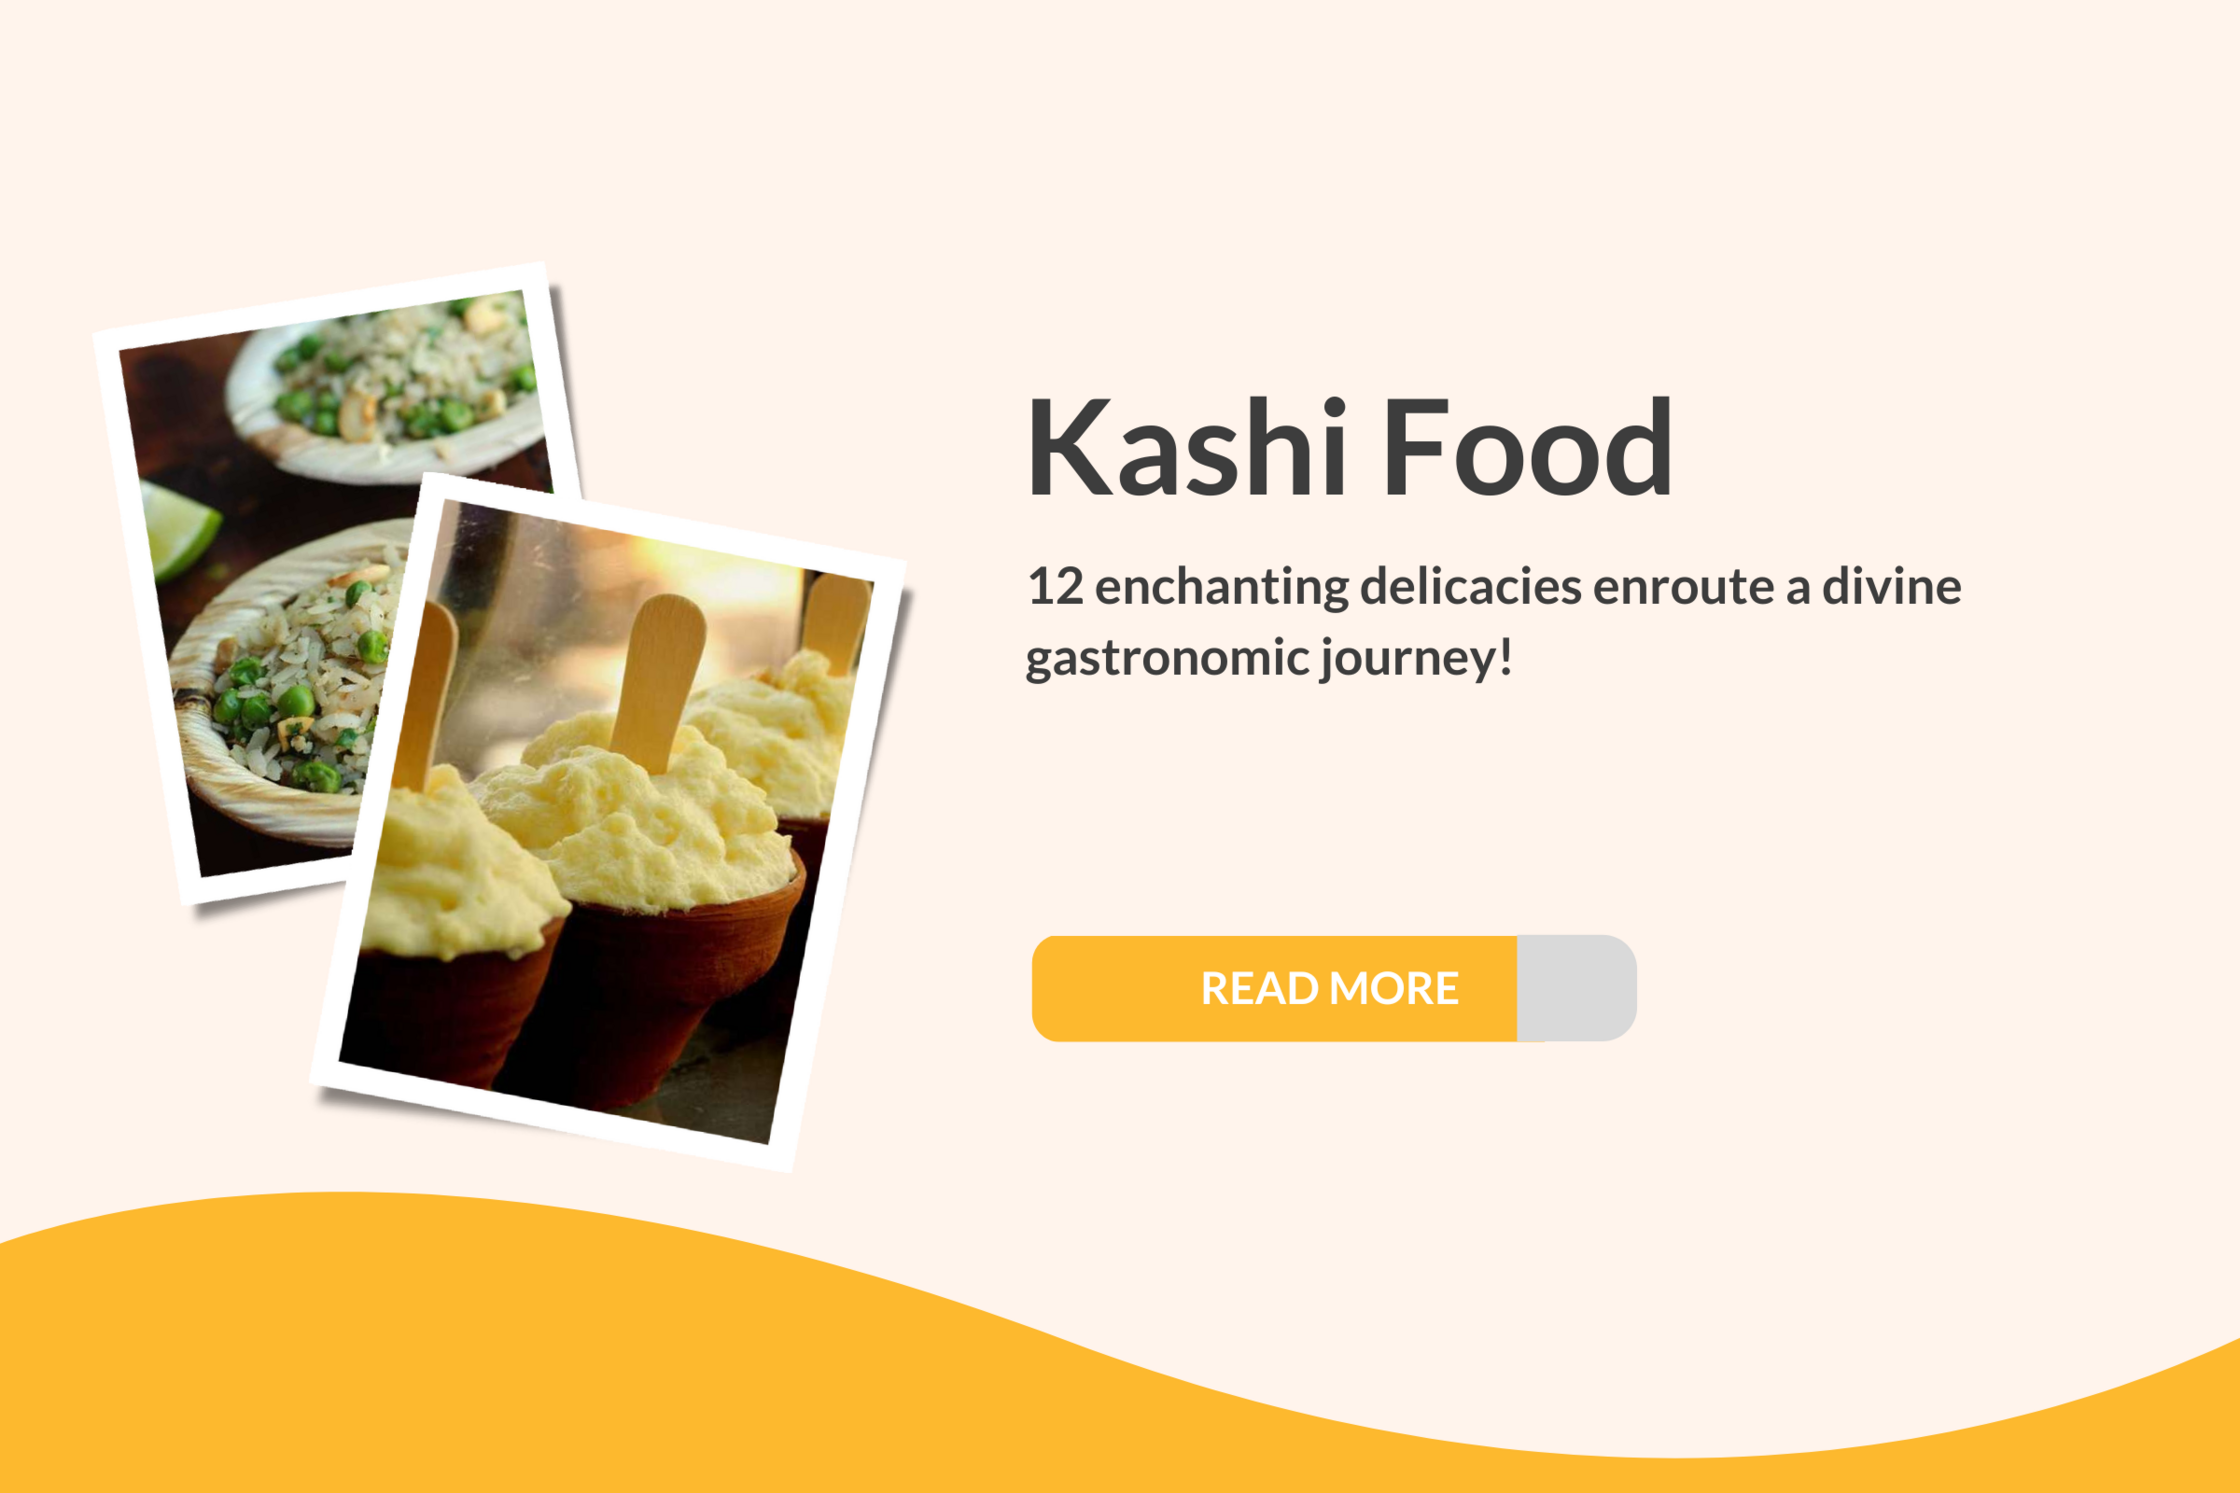 Kashi Food